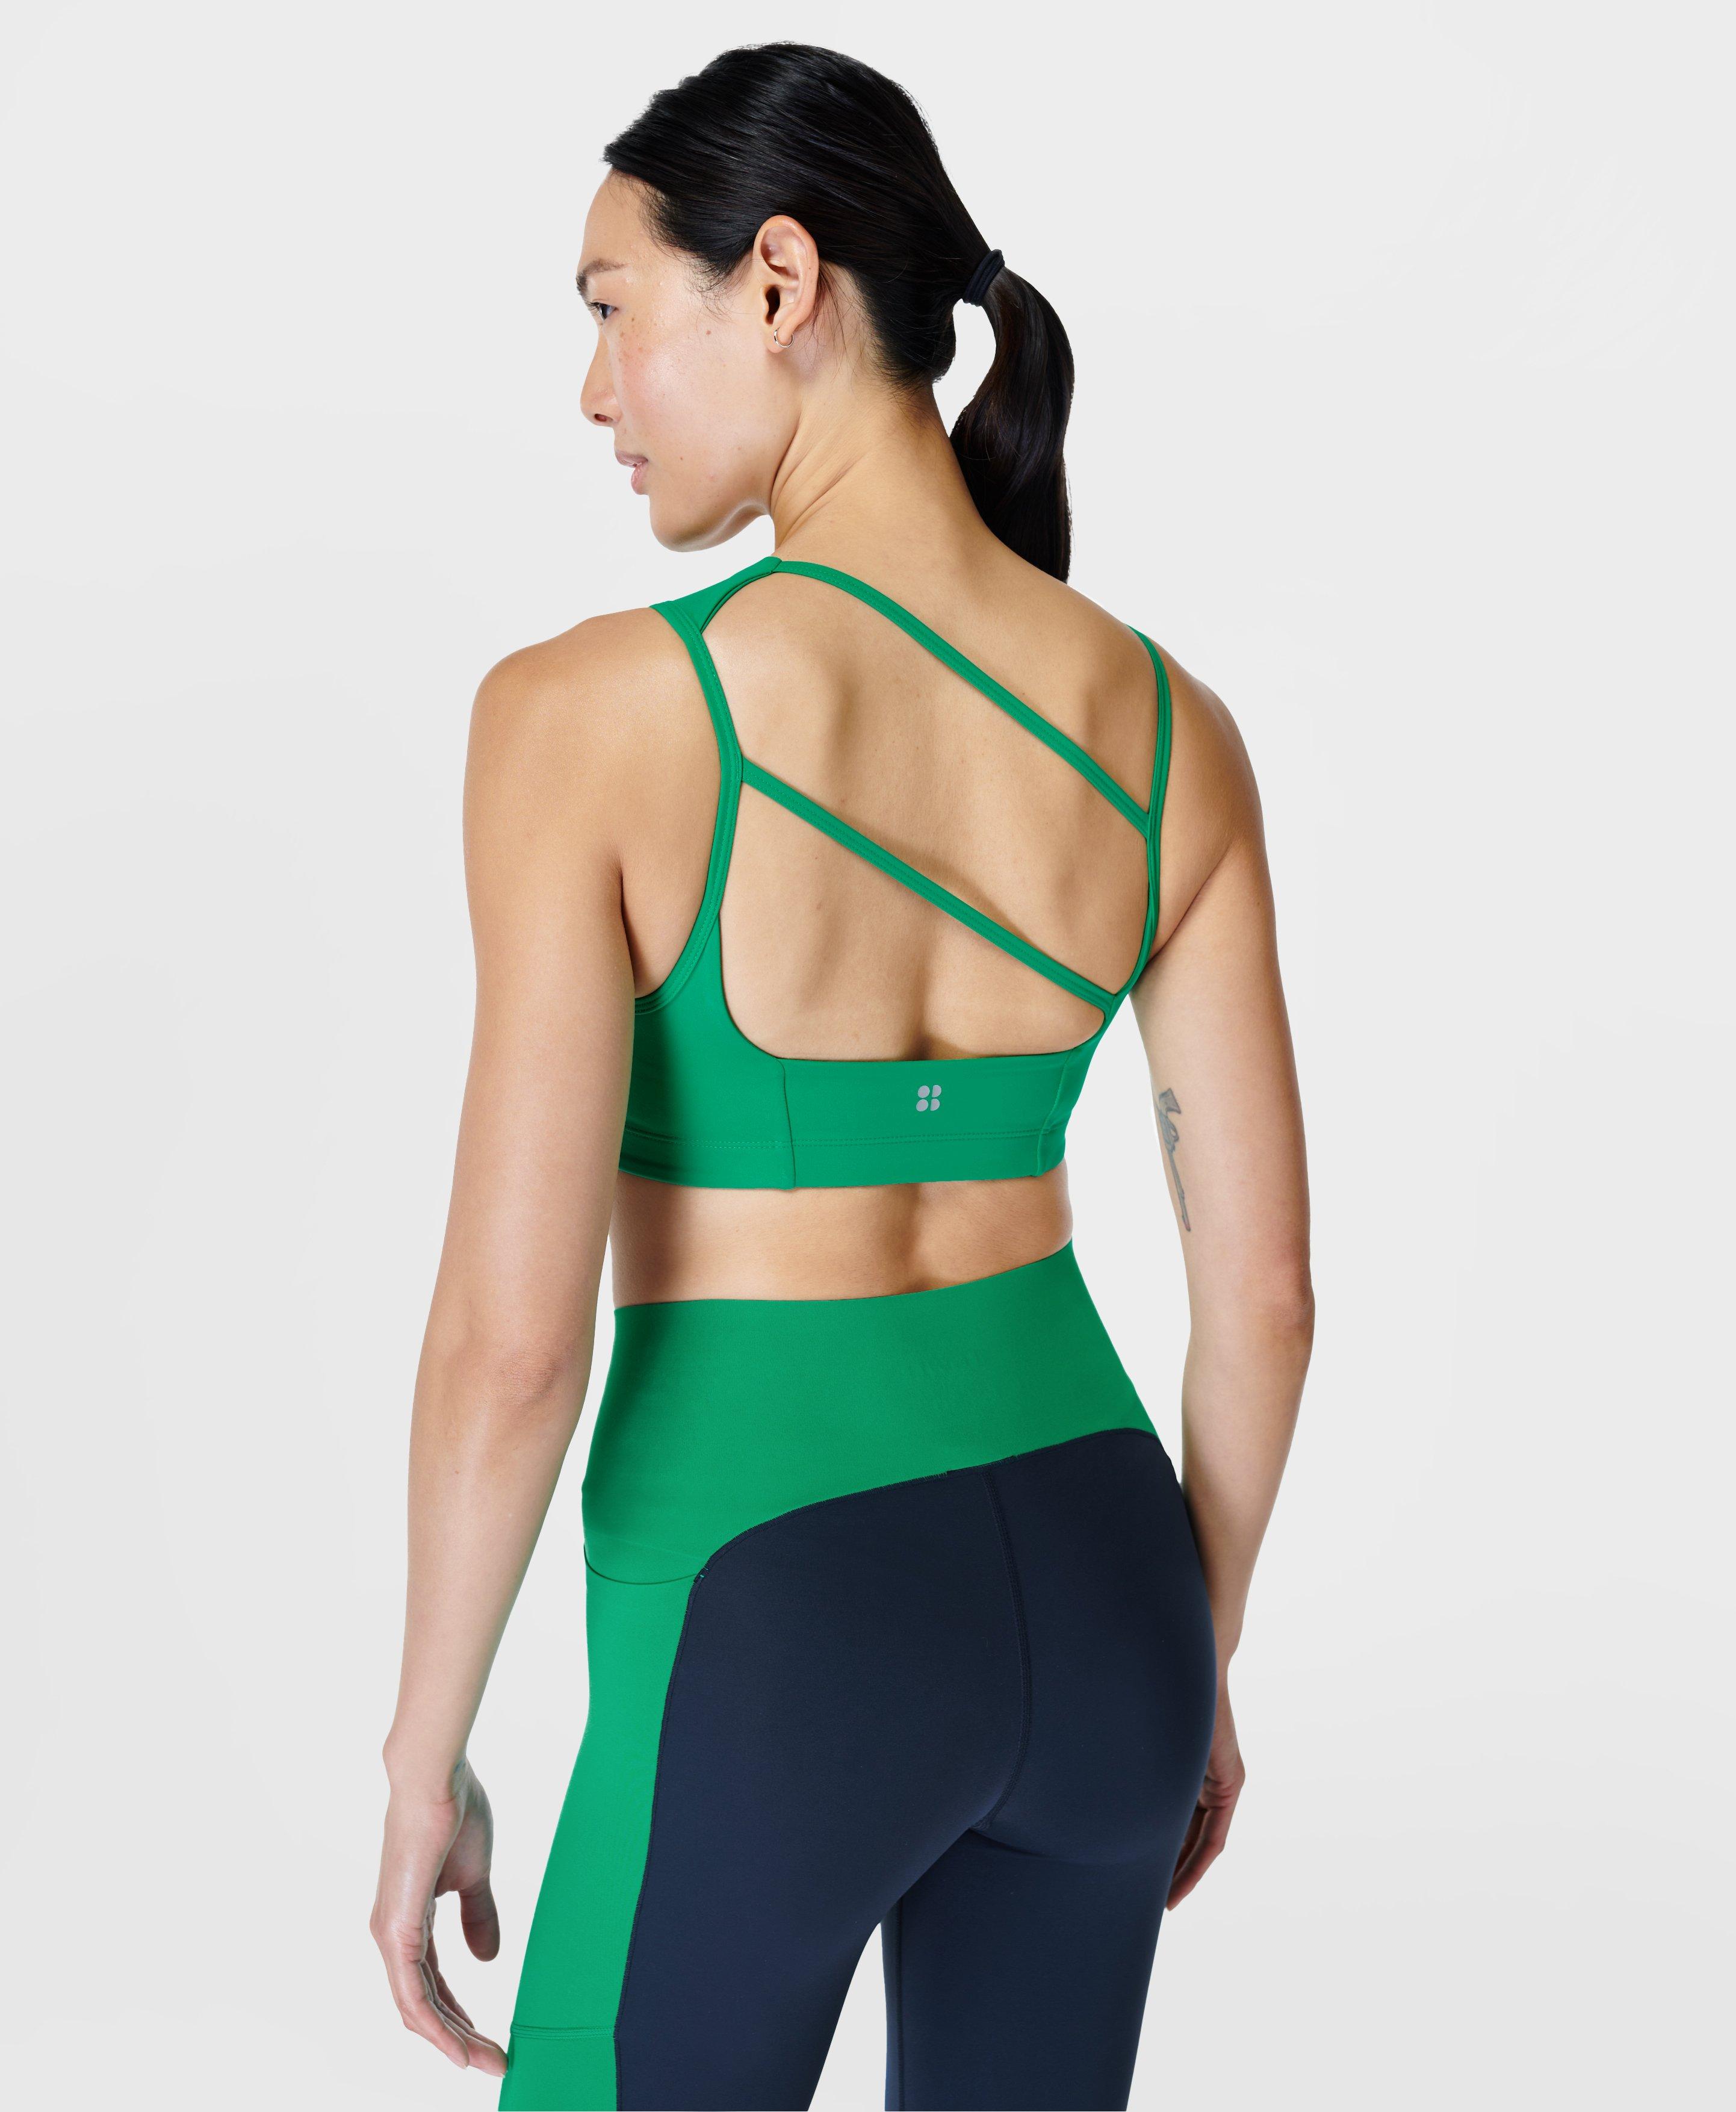 $65 Sweaty Betty Shanti Yoga Bra Top Size S Small Green padded nwt